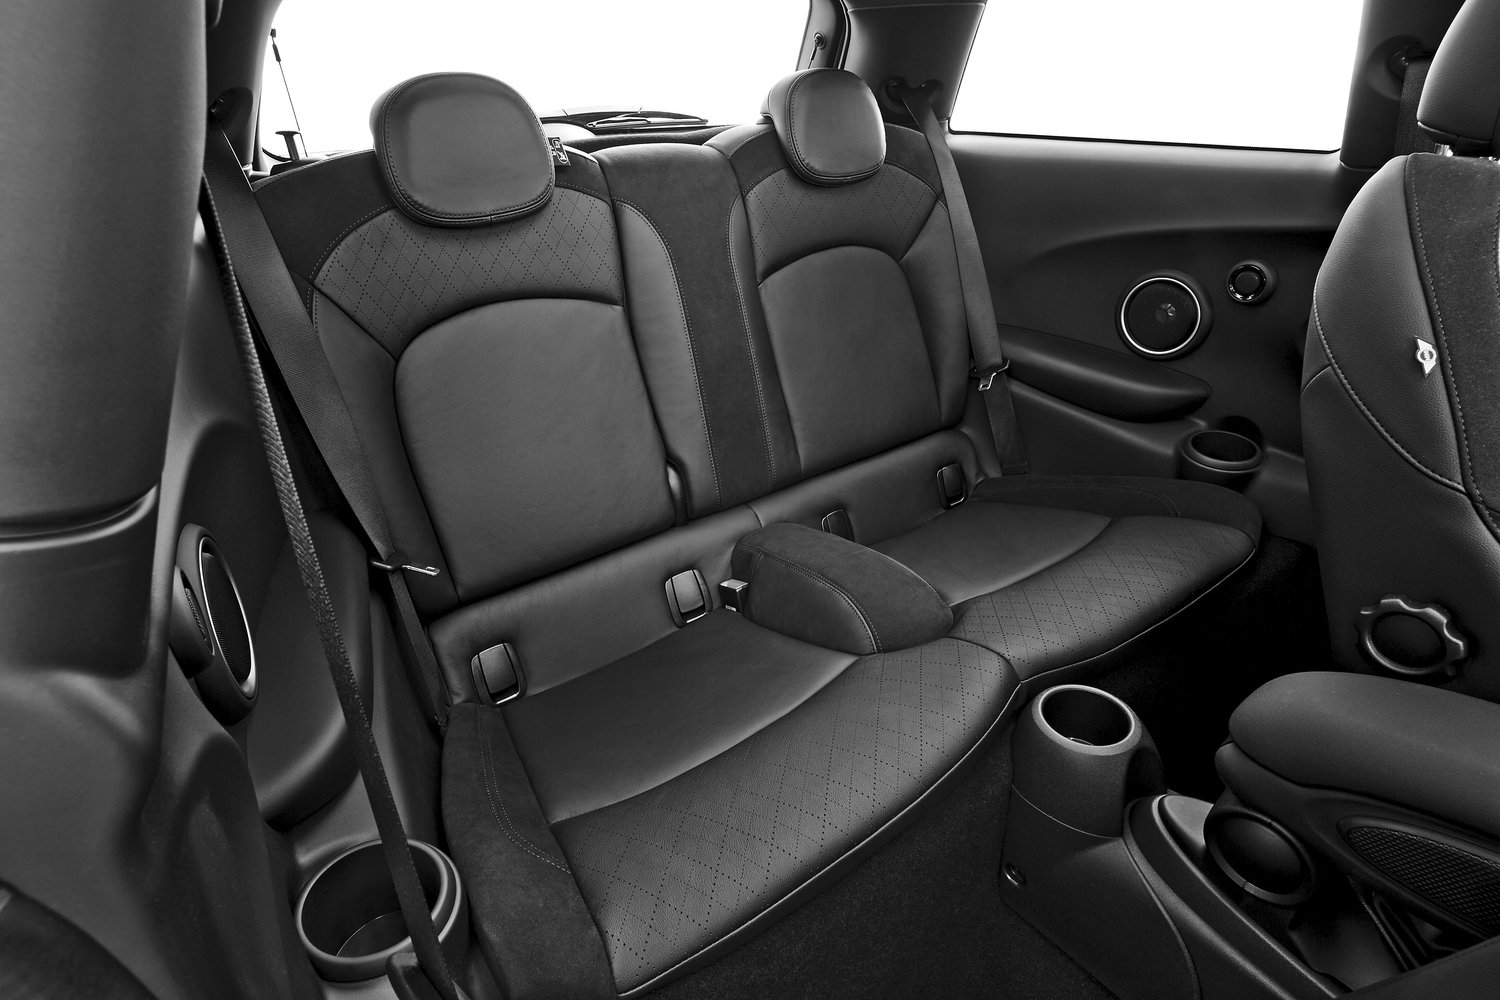 хэтчбек 3 дв. Cooper S MINI Hatch 2014 - 2016г выпуска модификация 2.0 AT (170 л.с.)